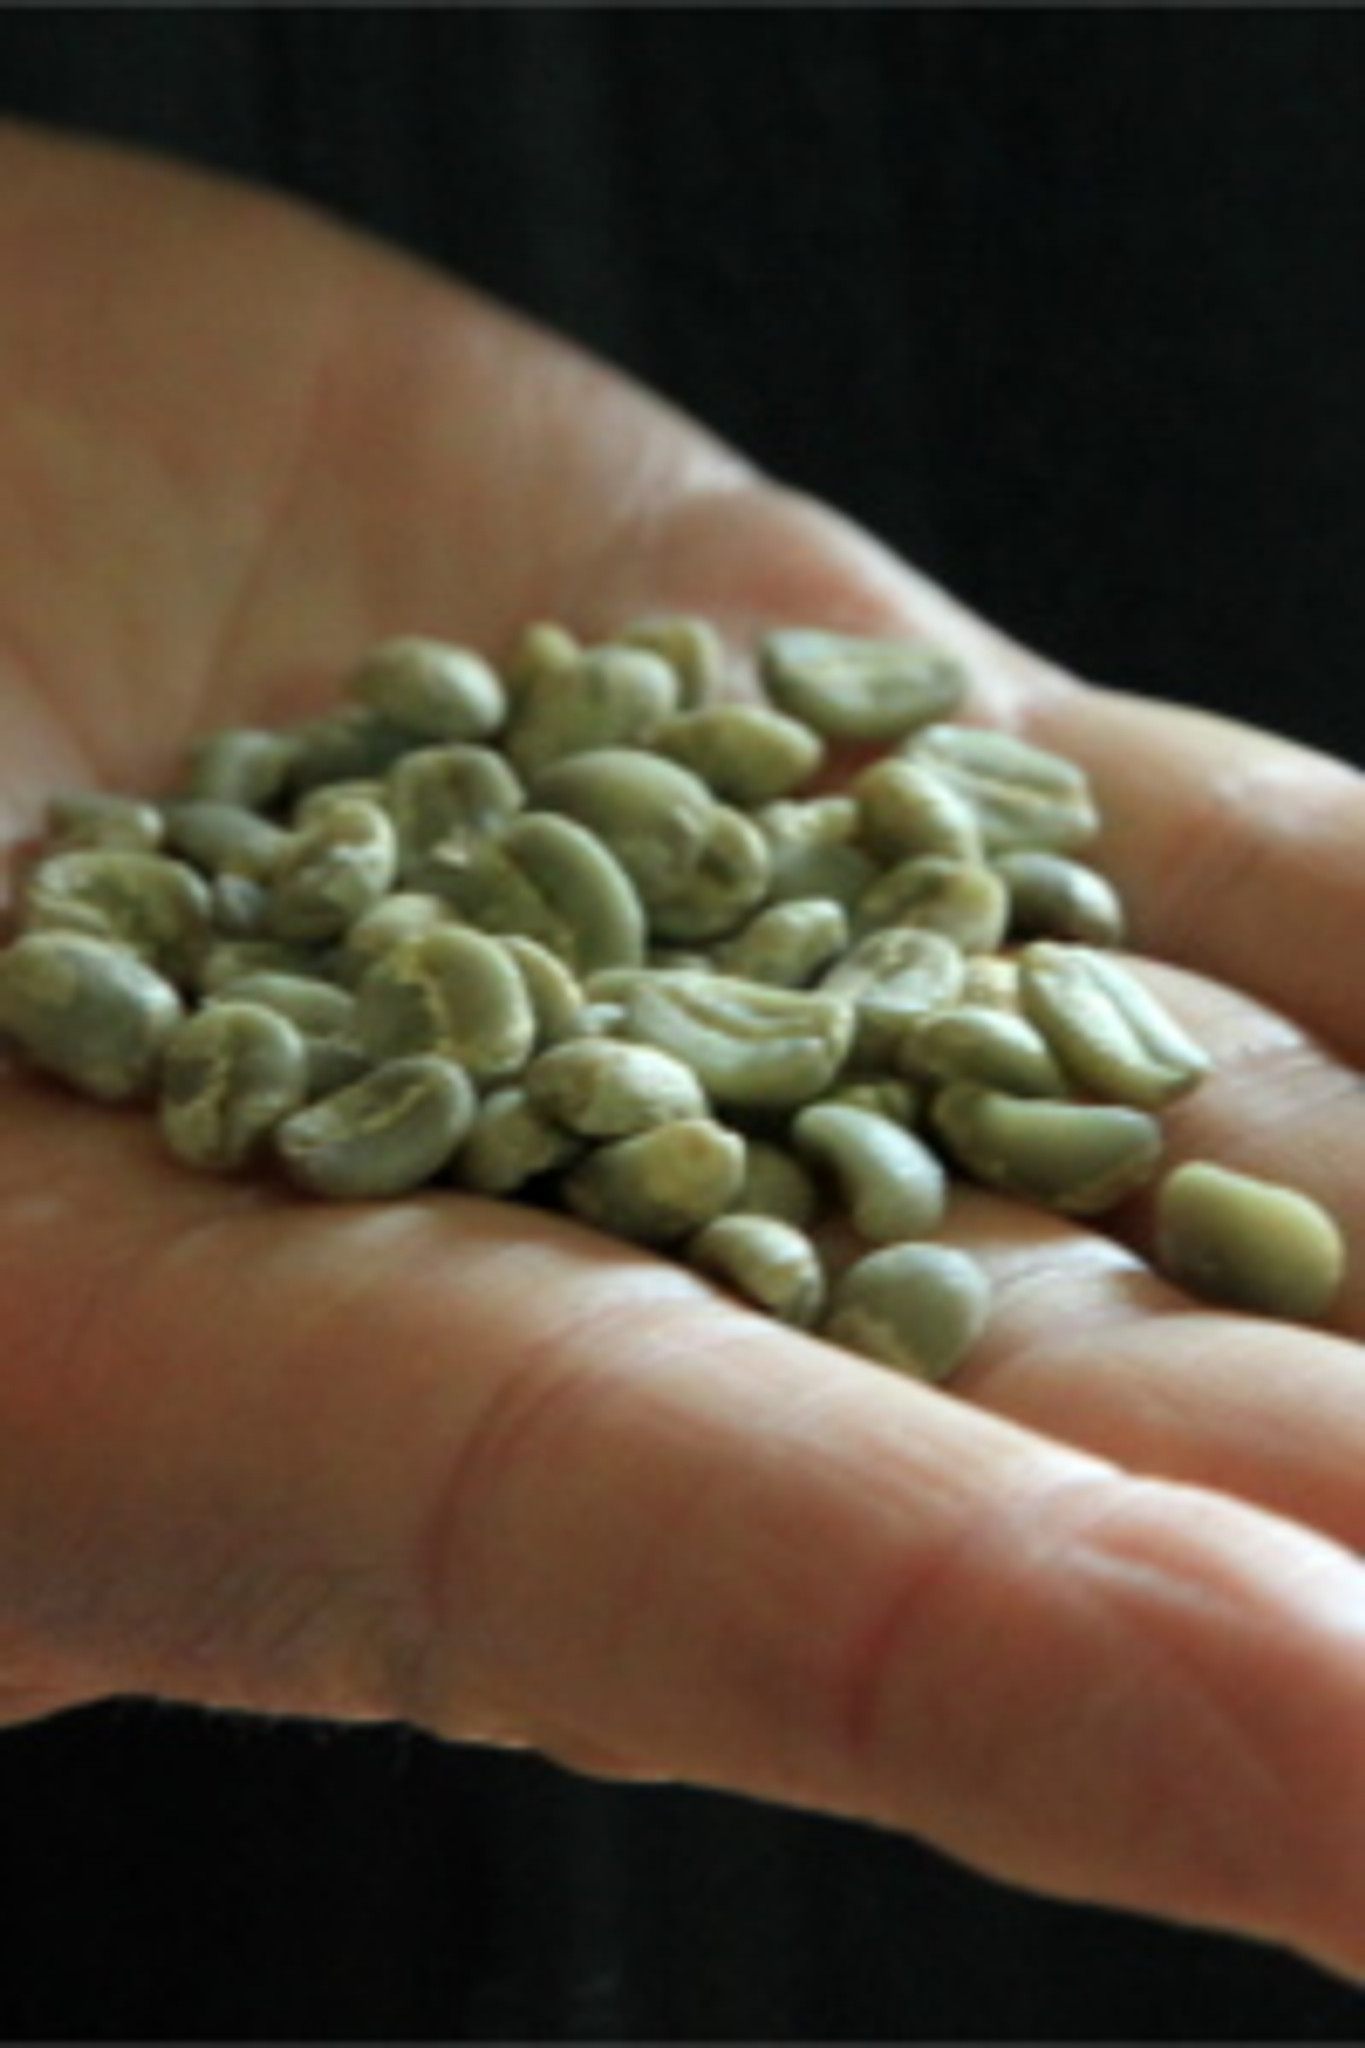 sumatra green coffee beans